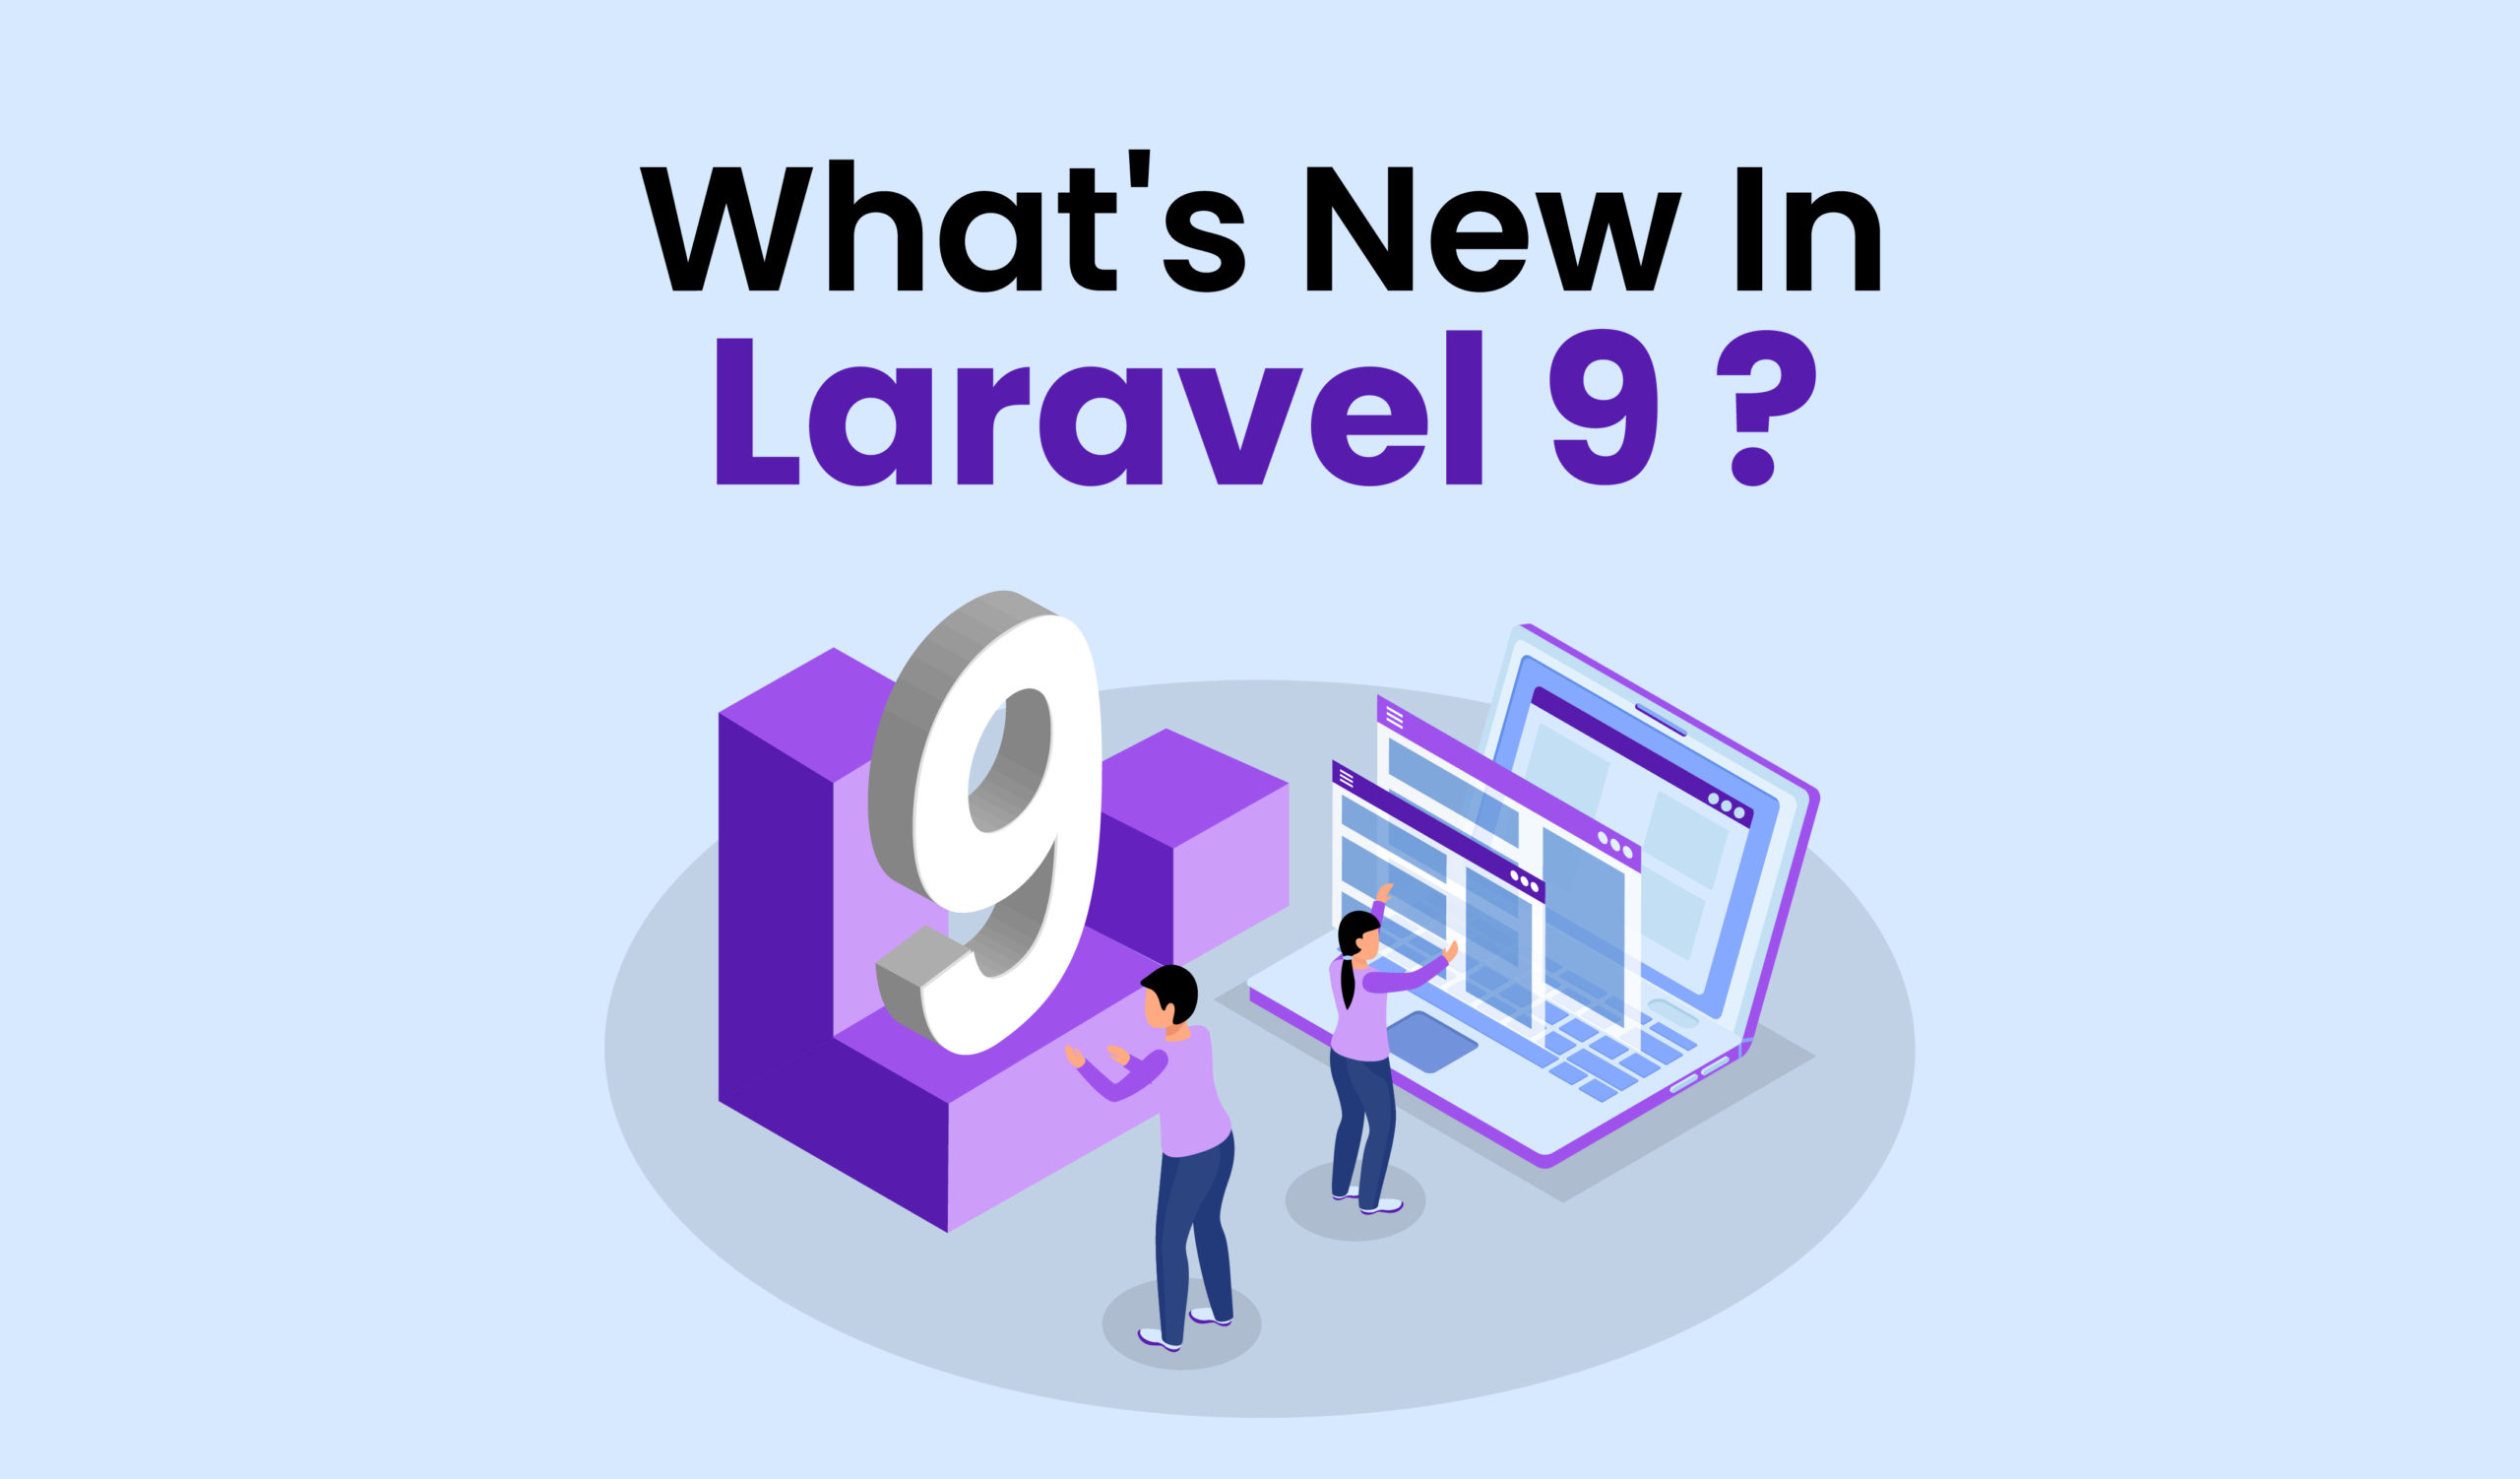 What’s new in Laravel 9?